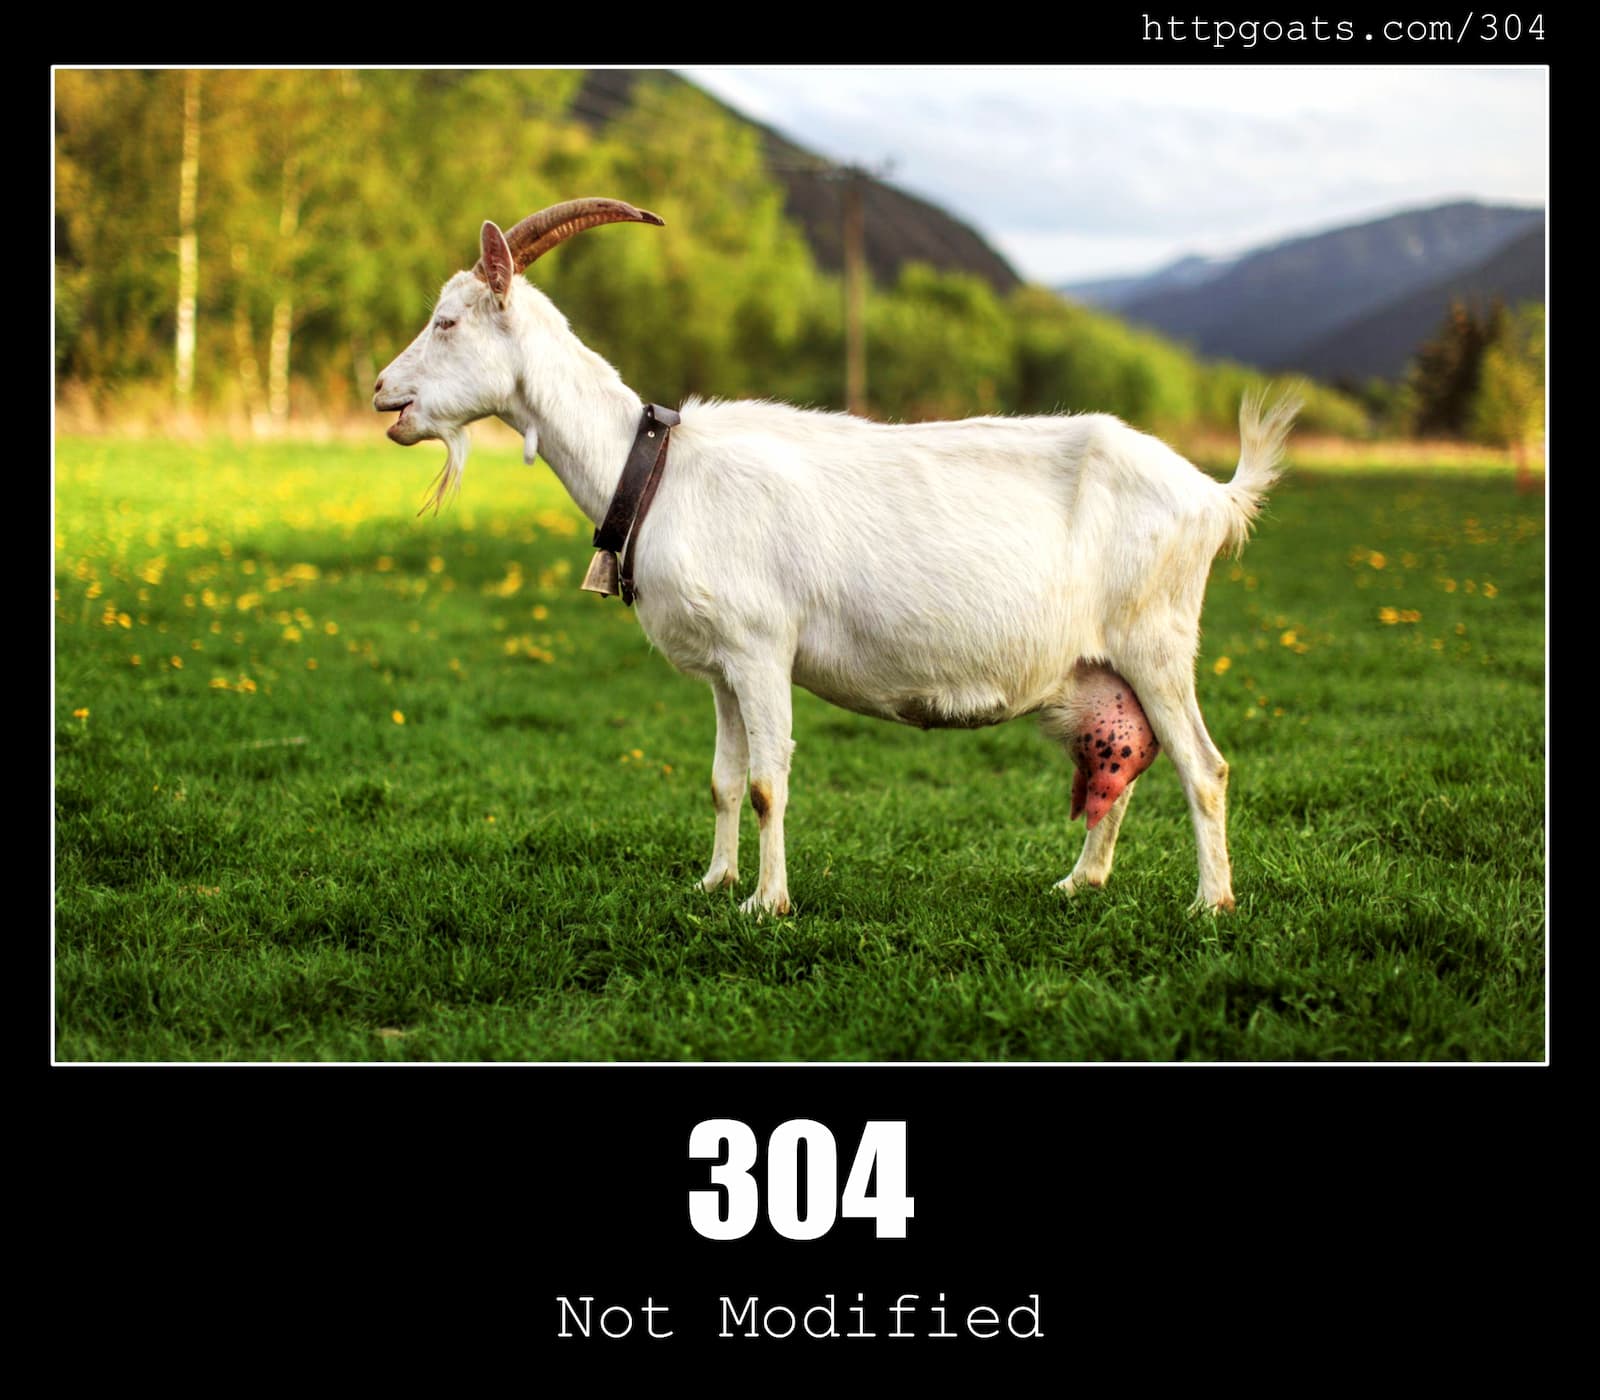 HTTP Status Code 304 Not Modified & Goats